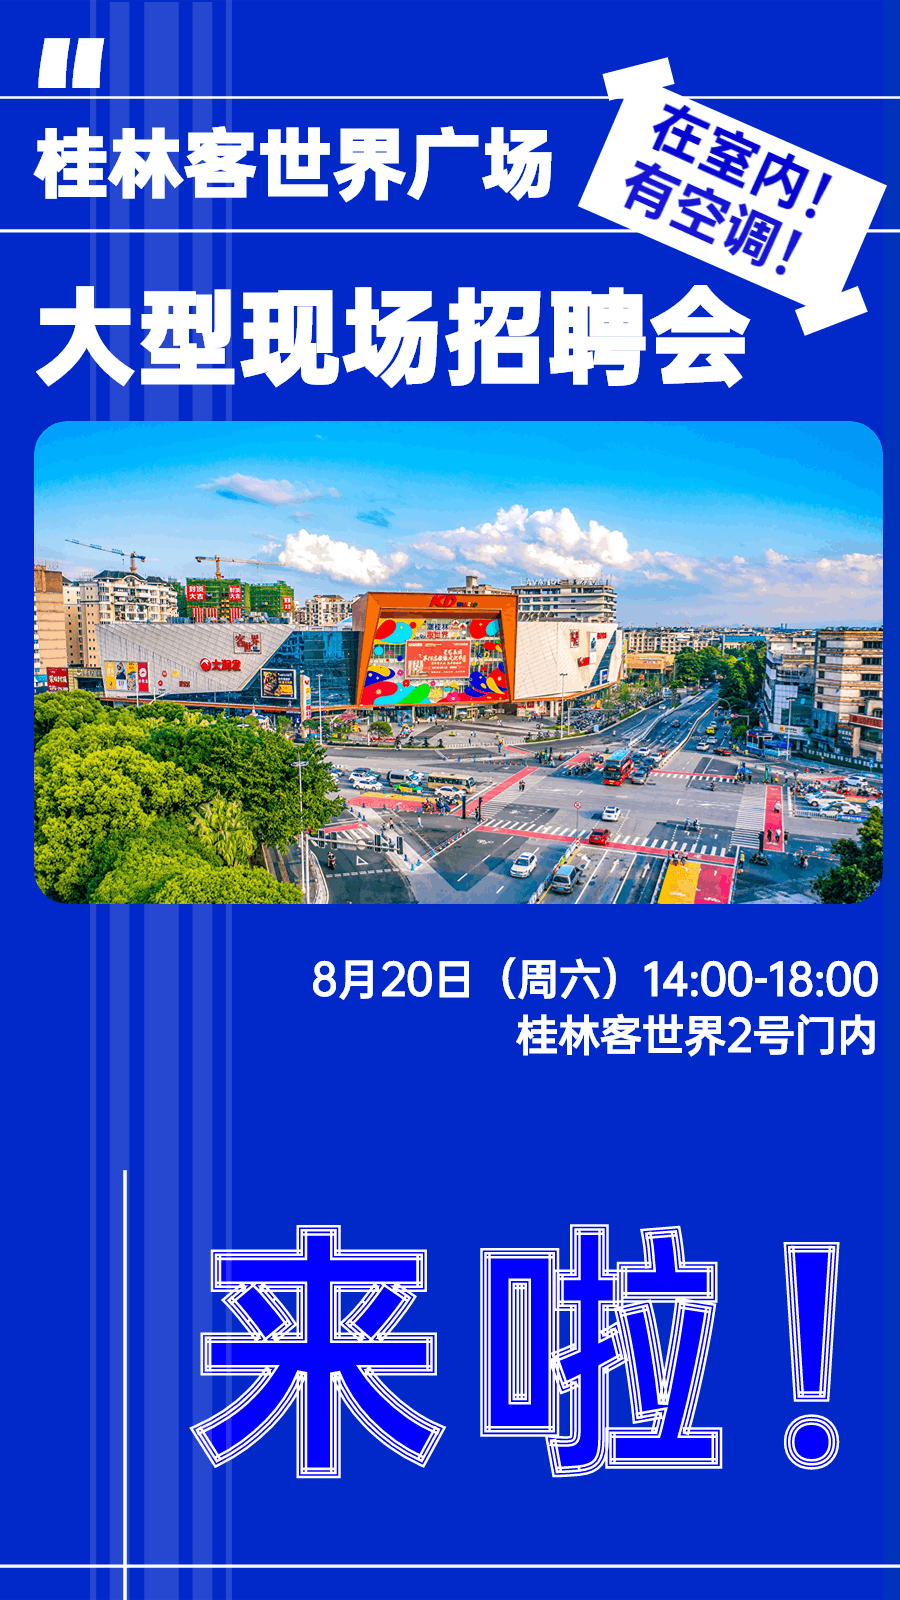 定了！就在8月20日，桂林客世界廣場！有空調的室內招聘會！這